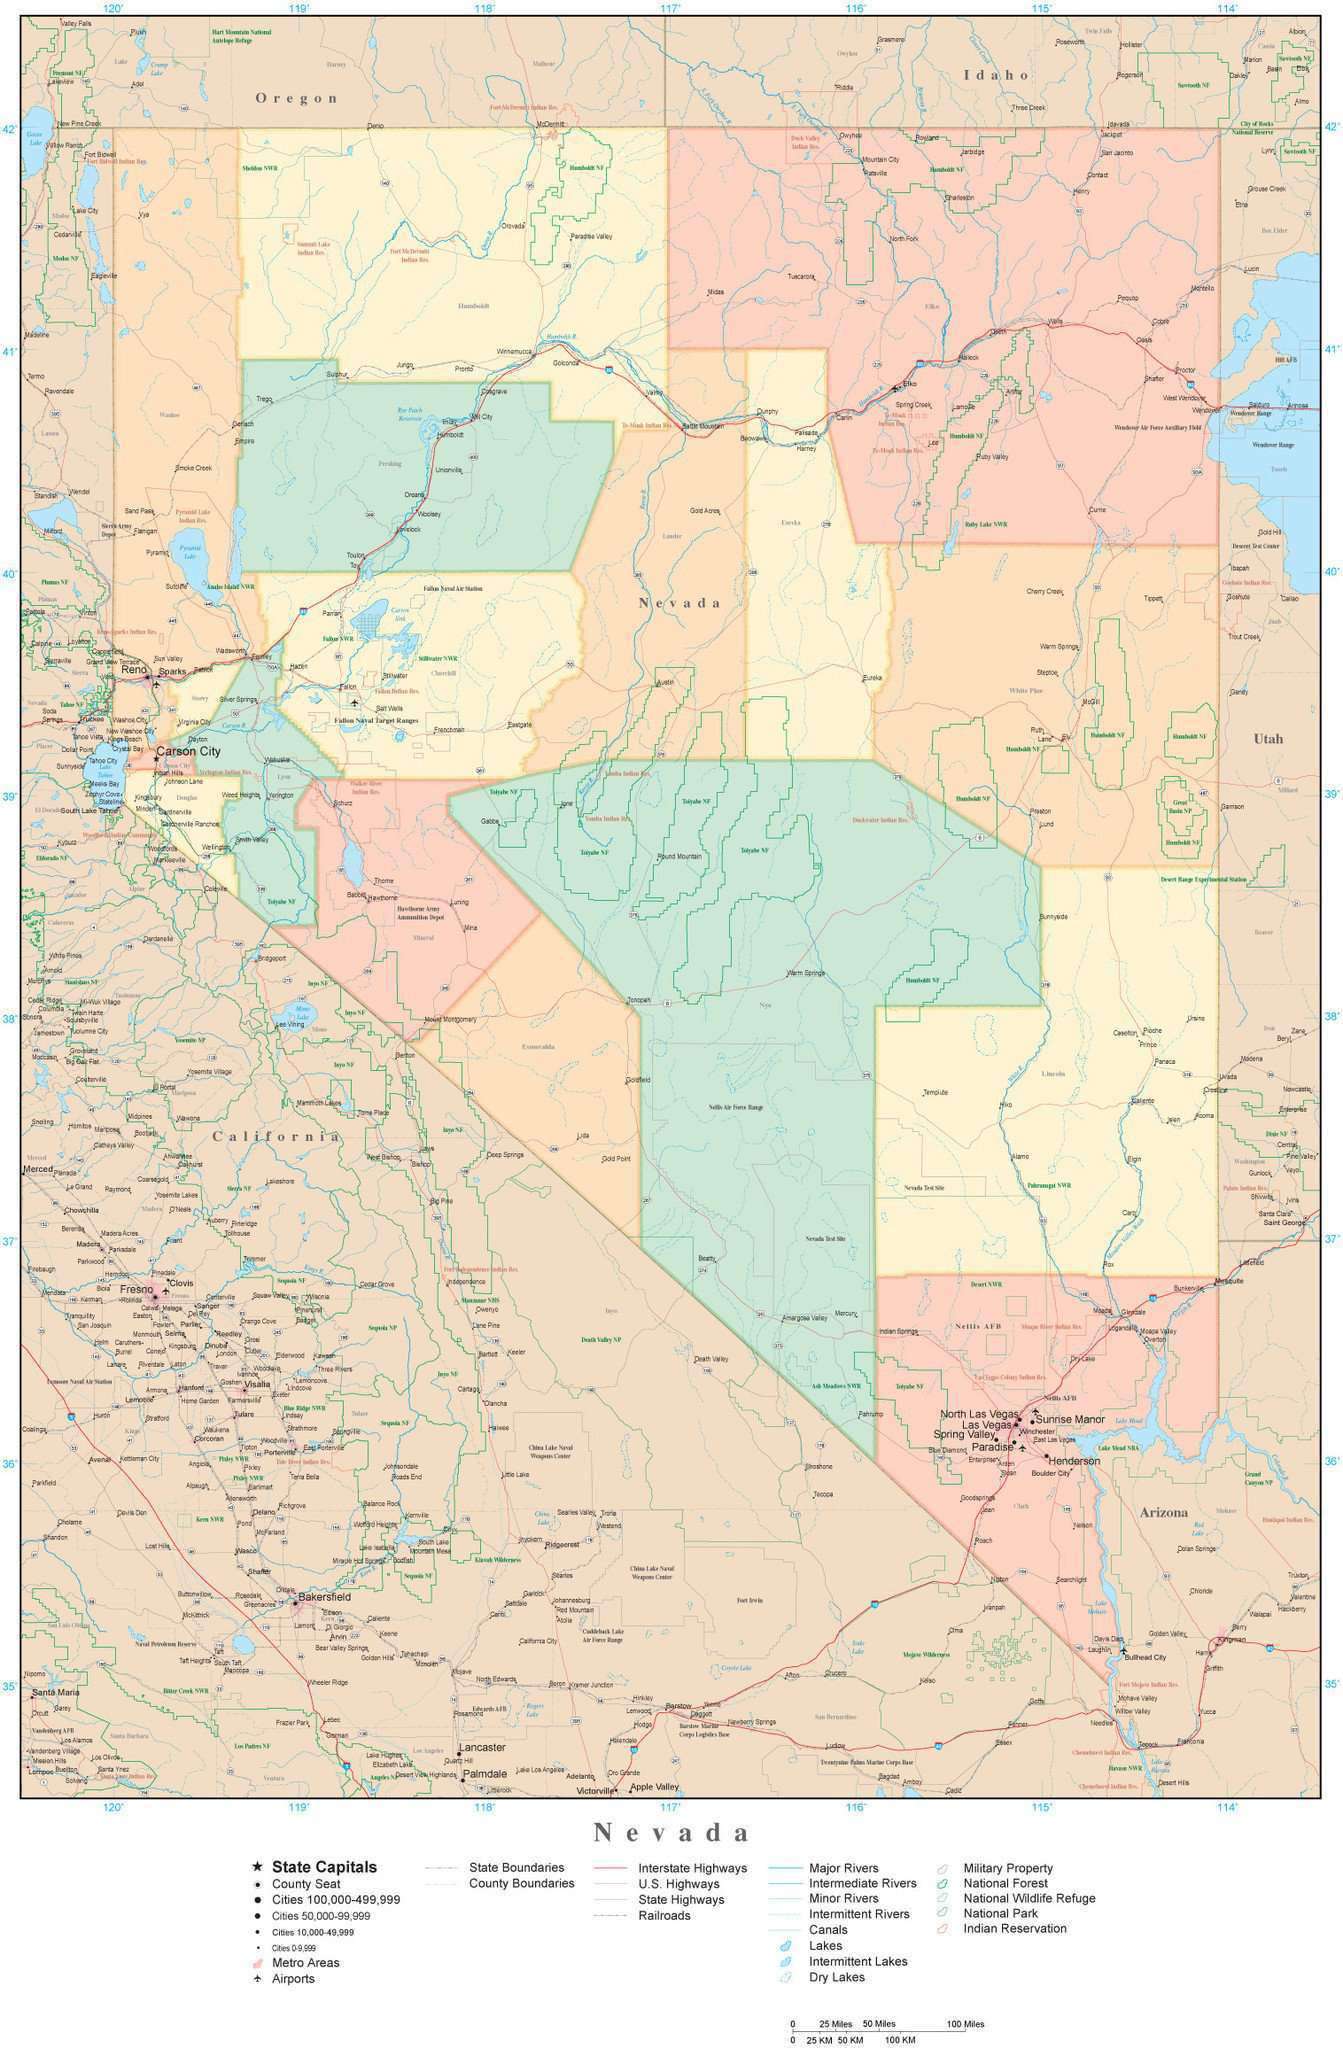 Nevada State Map in Adobe Illustrator Vector Format. Detailed, editable